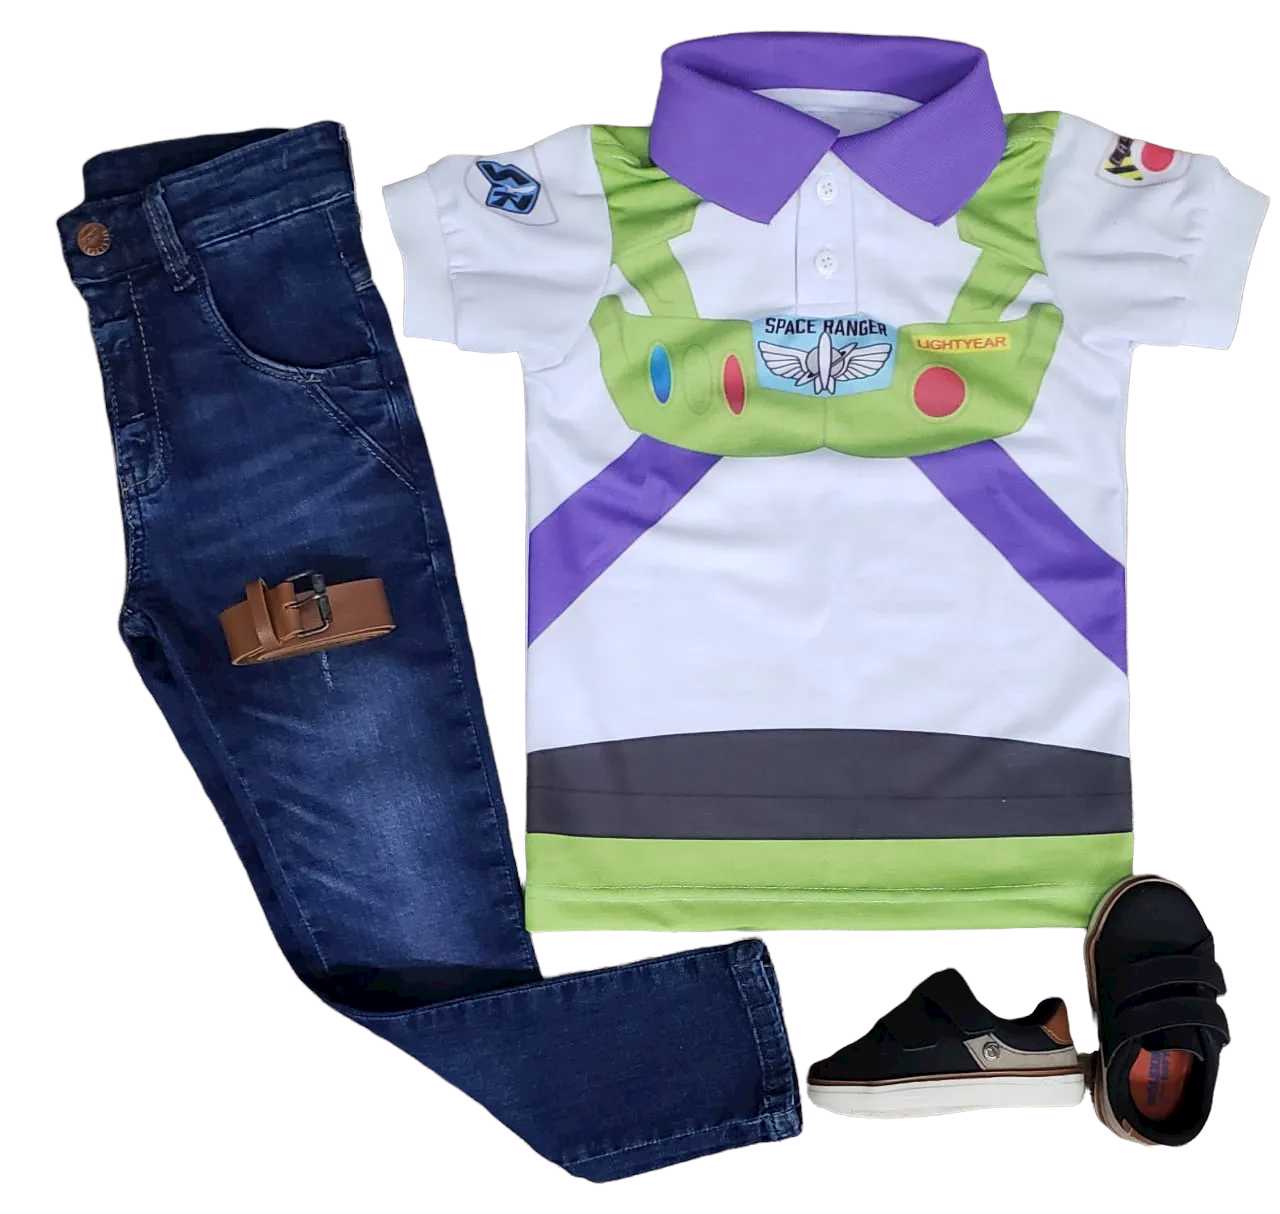 Roupa Calça Jeans Buzz Lightyear - Toy Story Infantil  - Lojinha da Vivi